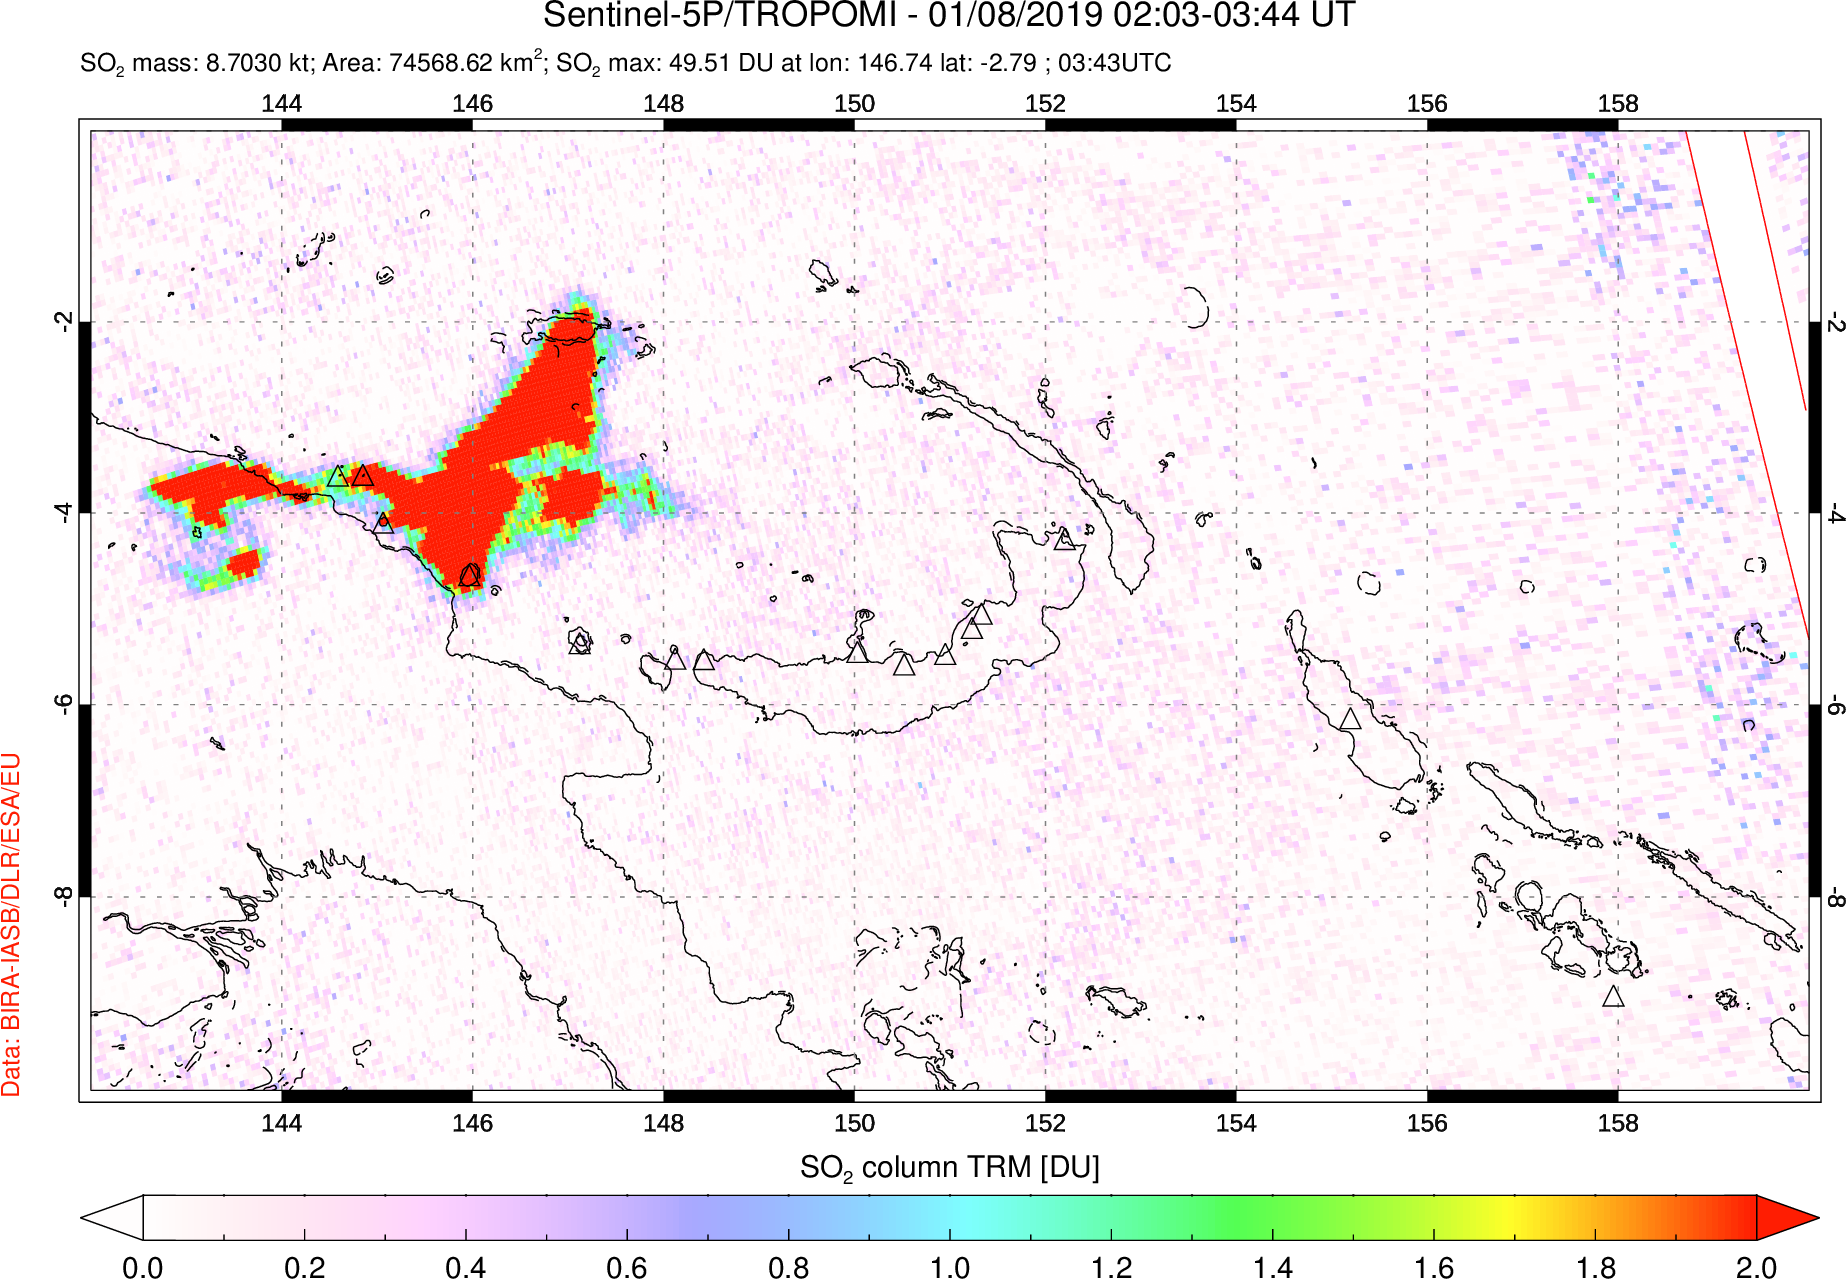 A sulfur dioxide image over Papua, New Guinea on Jan 08, 2019.